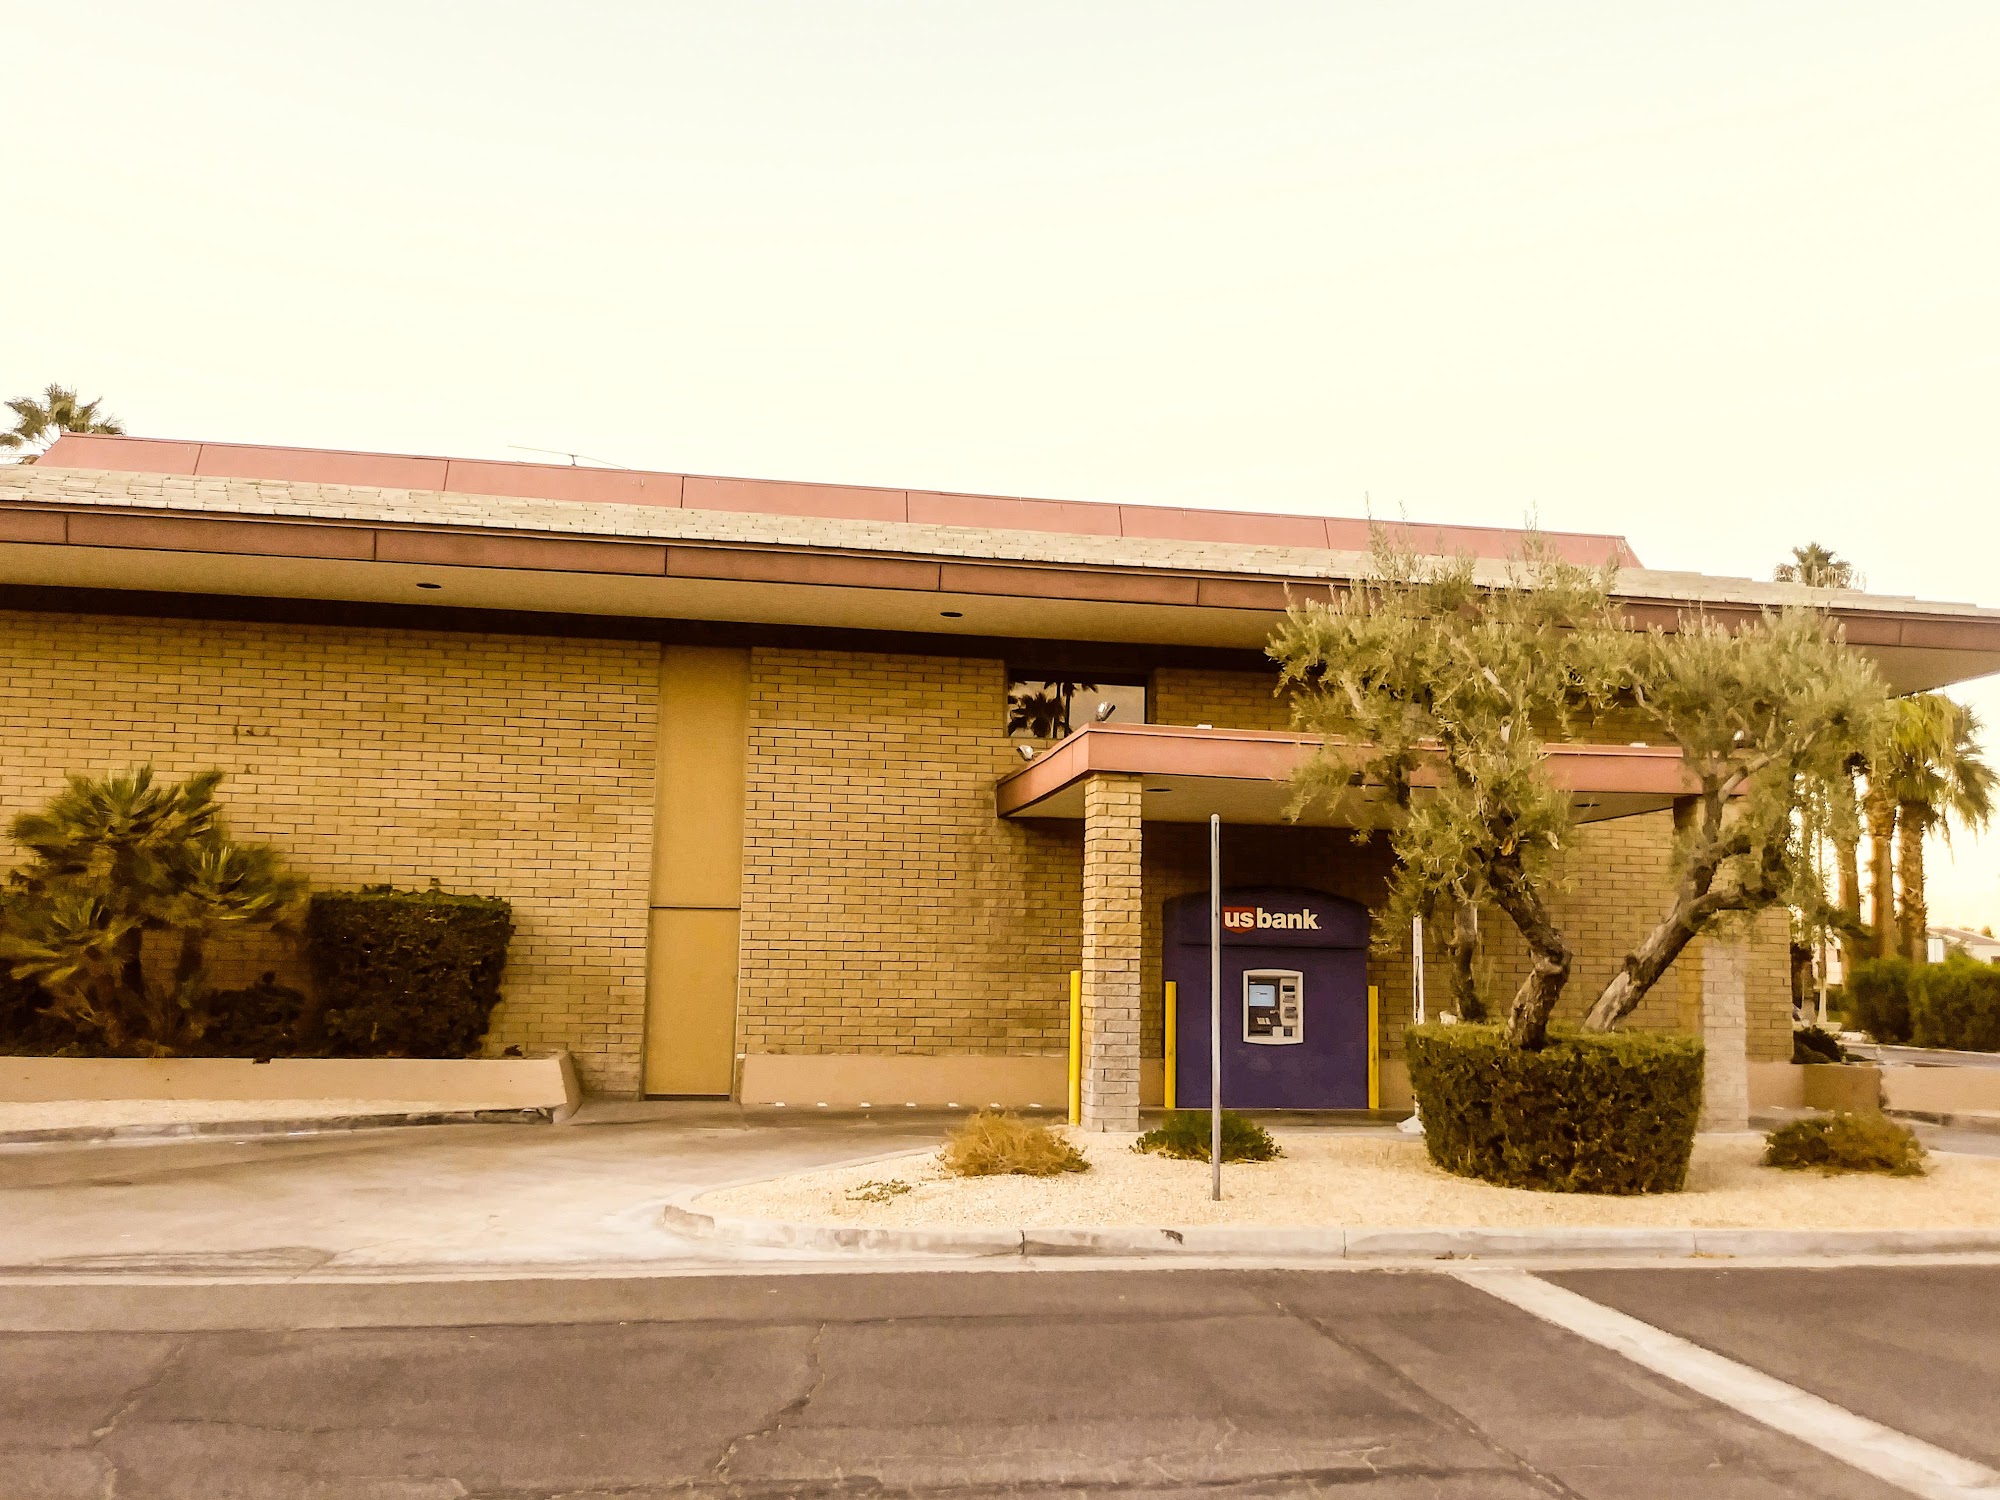 U.S. Bank Palm Springs
ATM